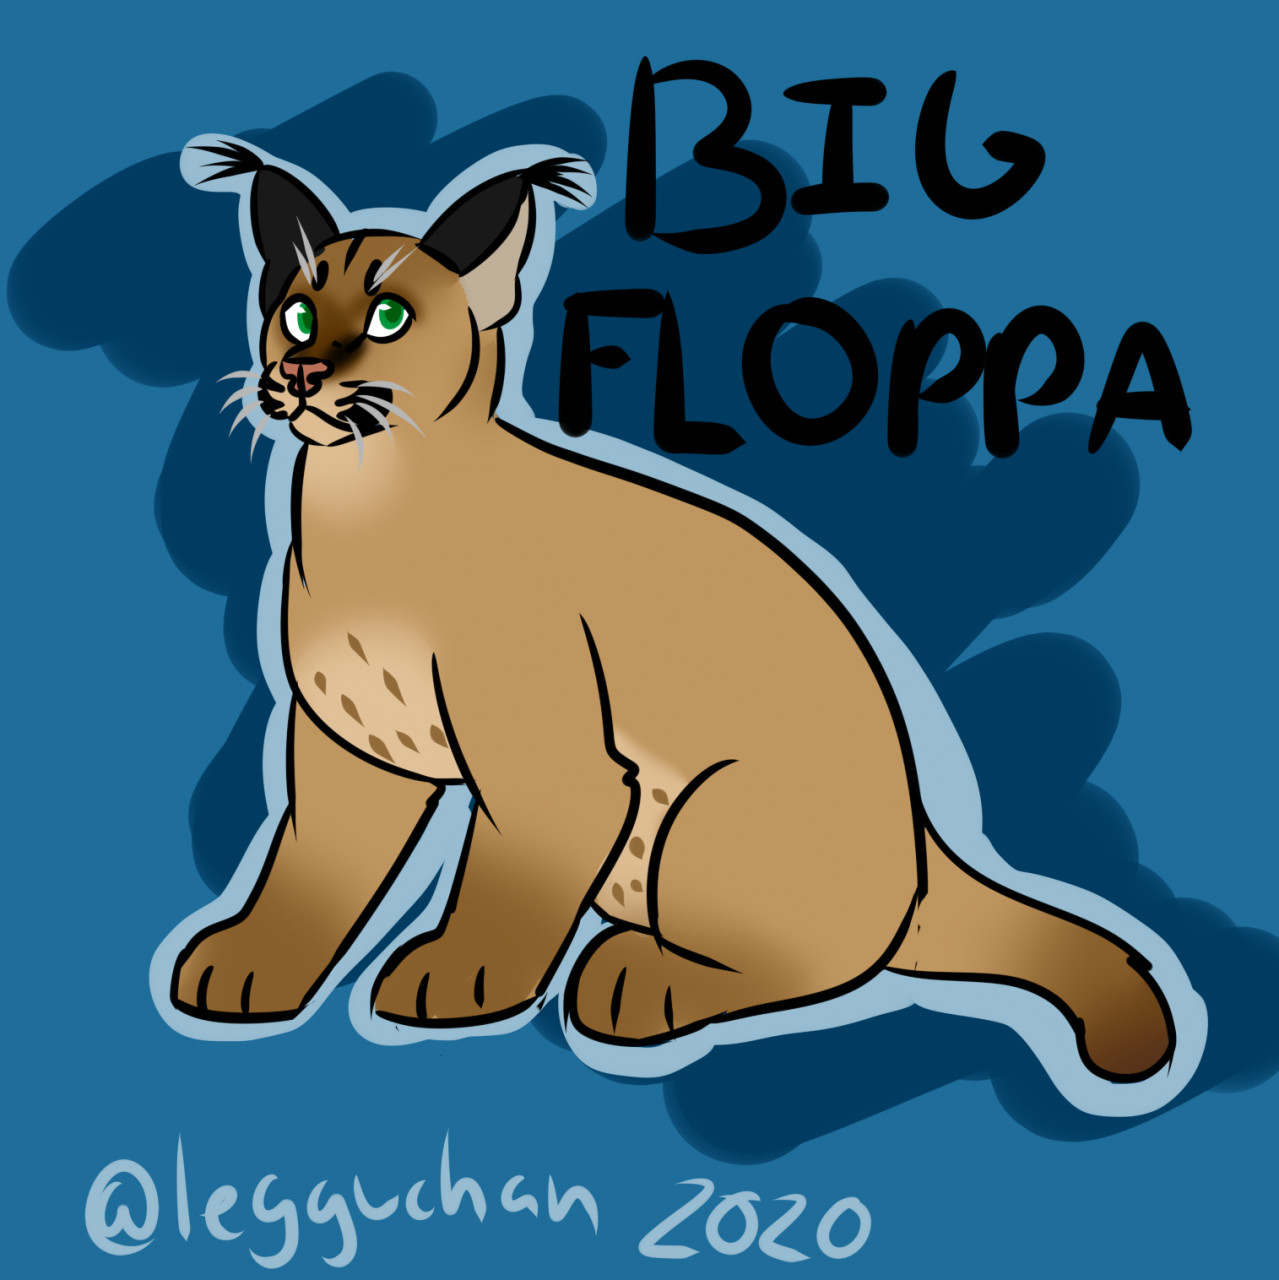 Big floppa - Cat